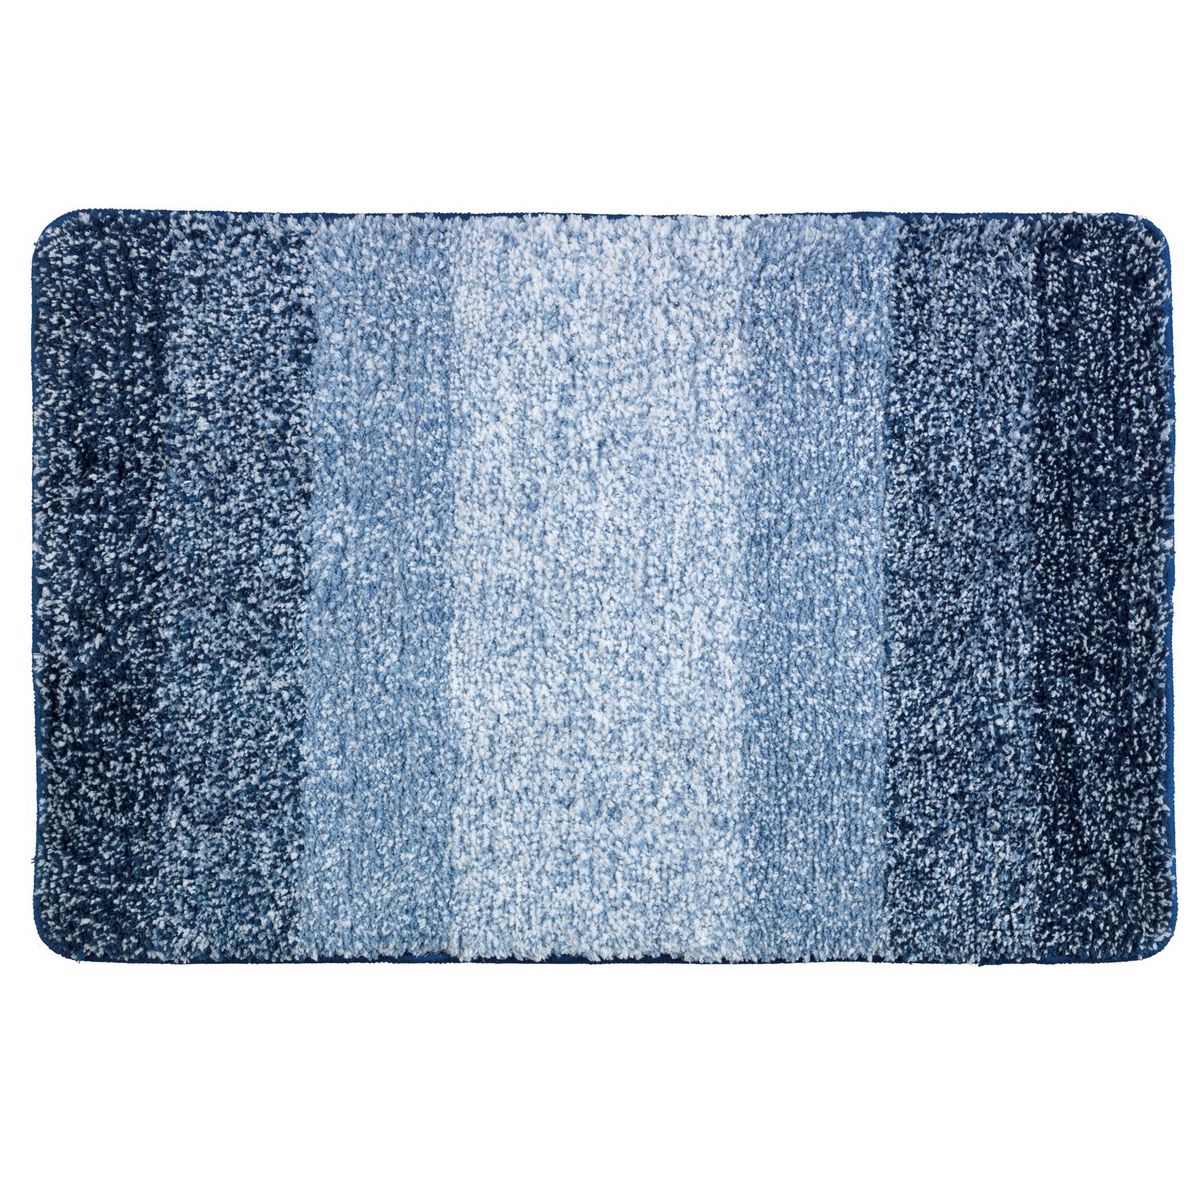 Wenko Tapis de salle de bain moderne Luso - L. 90 x l. 60 cm - Bleu